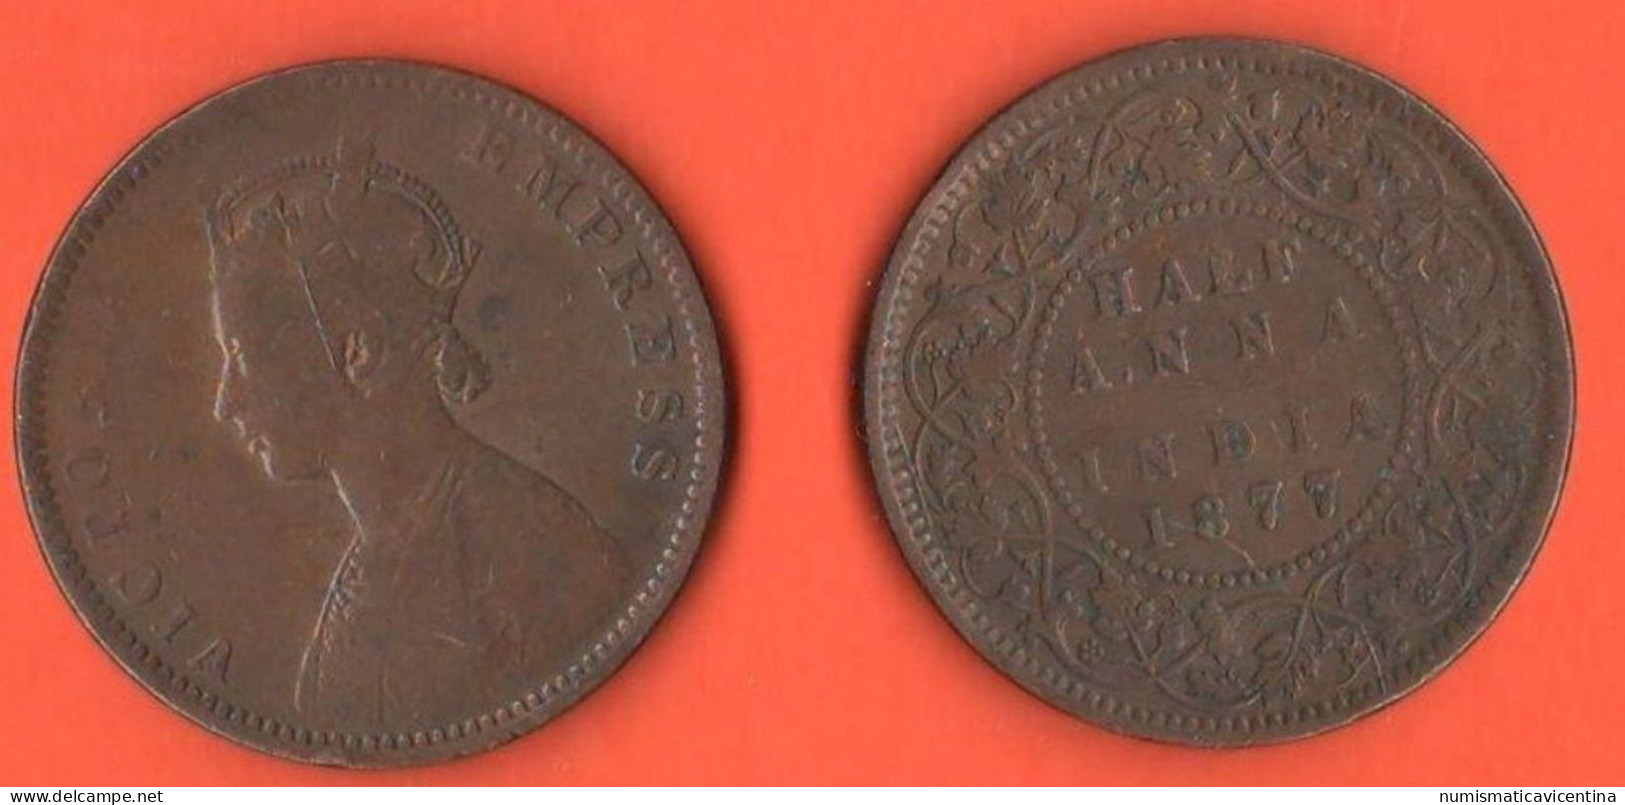 1/2 Anna 1877 British India Half Anna Indie Victoria Queen British Colonies Copper Coin K 487 - Colonies